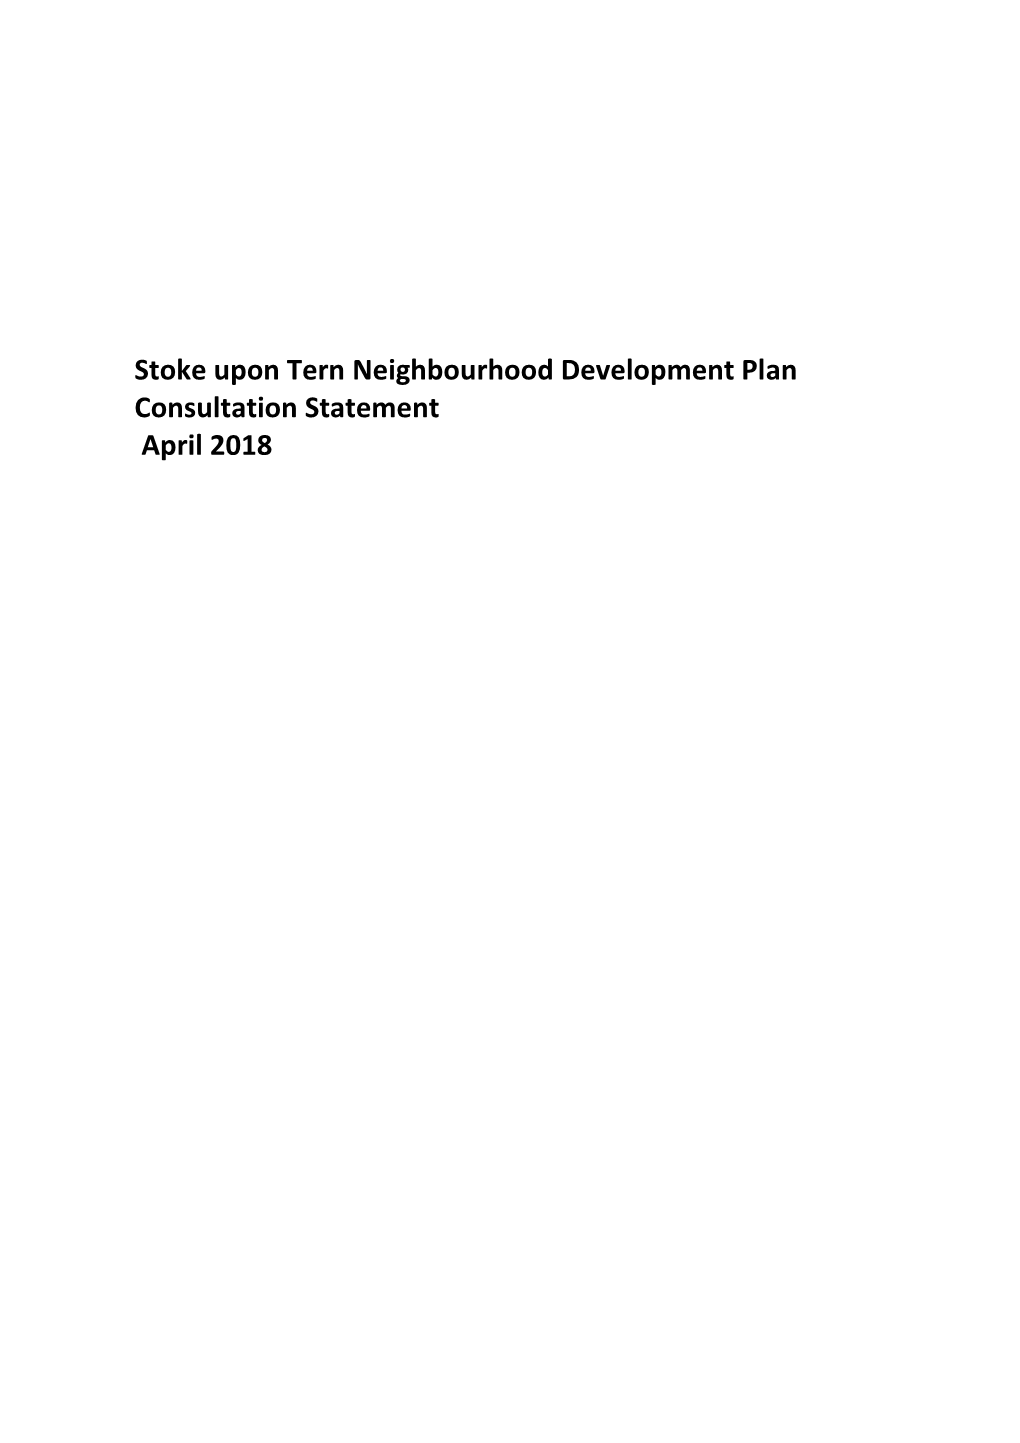 Stoke Upon Tern Neighbourhood Development Plan Consultation Statement April 2018